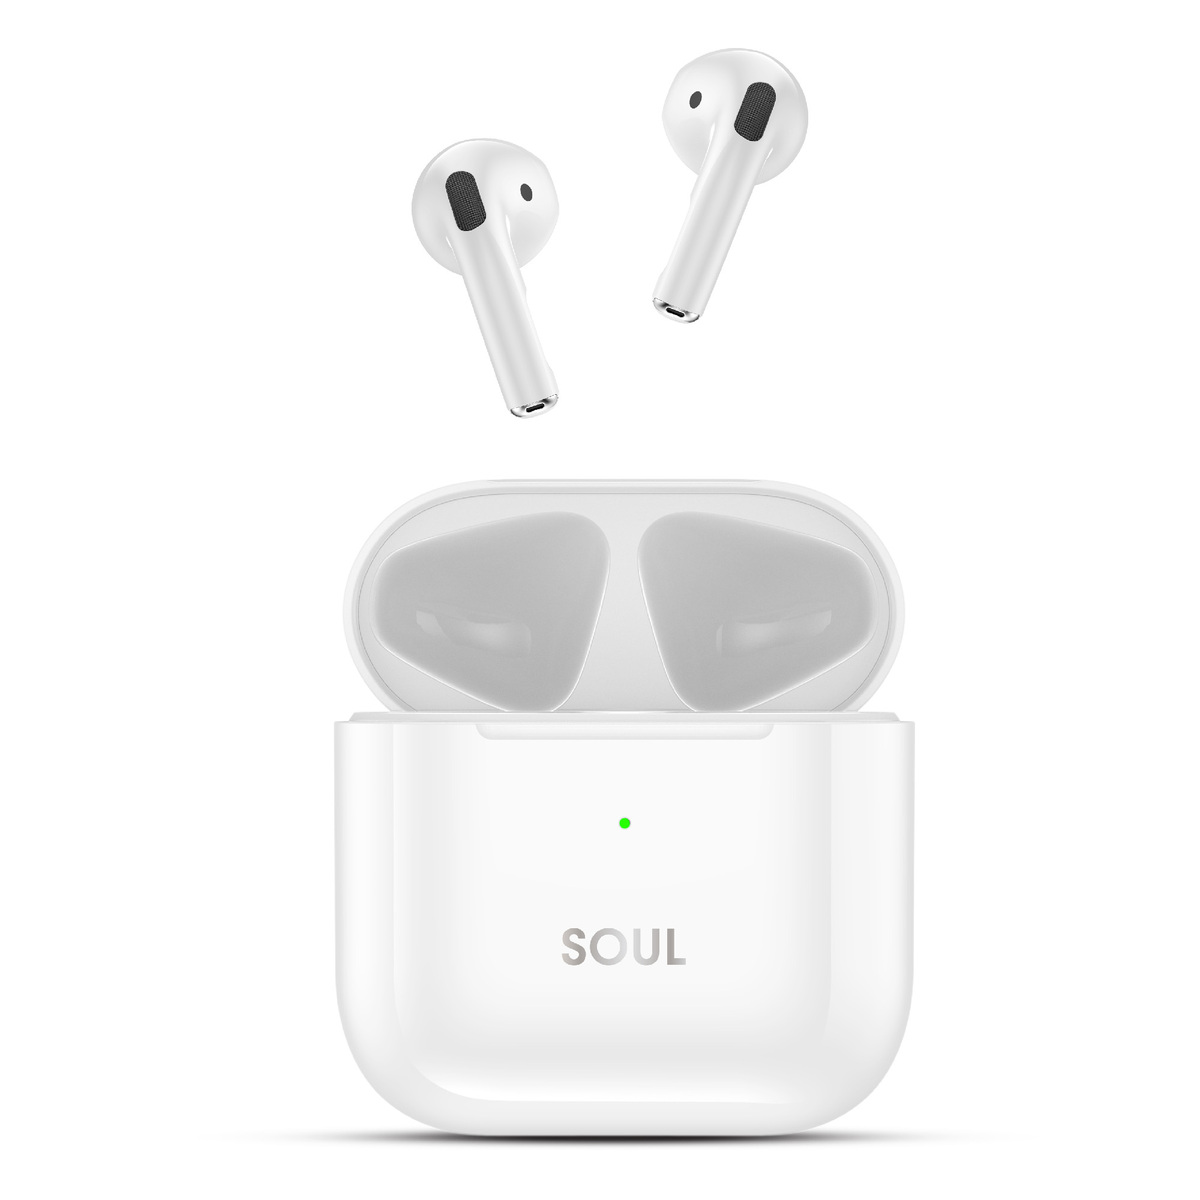 Xcell SOUL 11 True Wireless Earbuds White